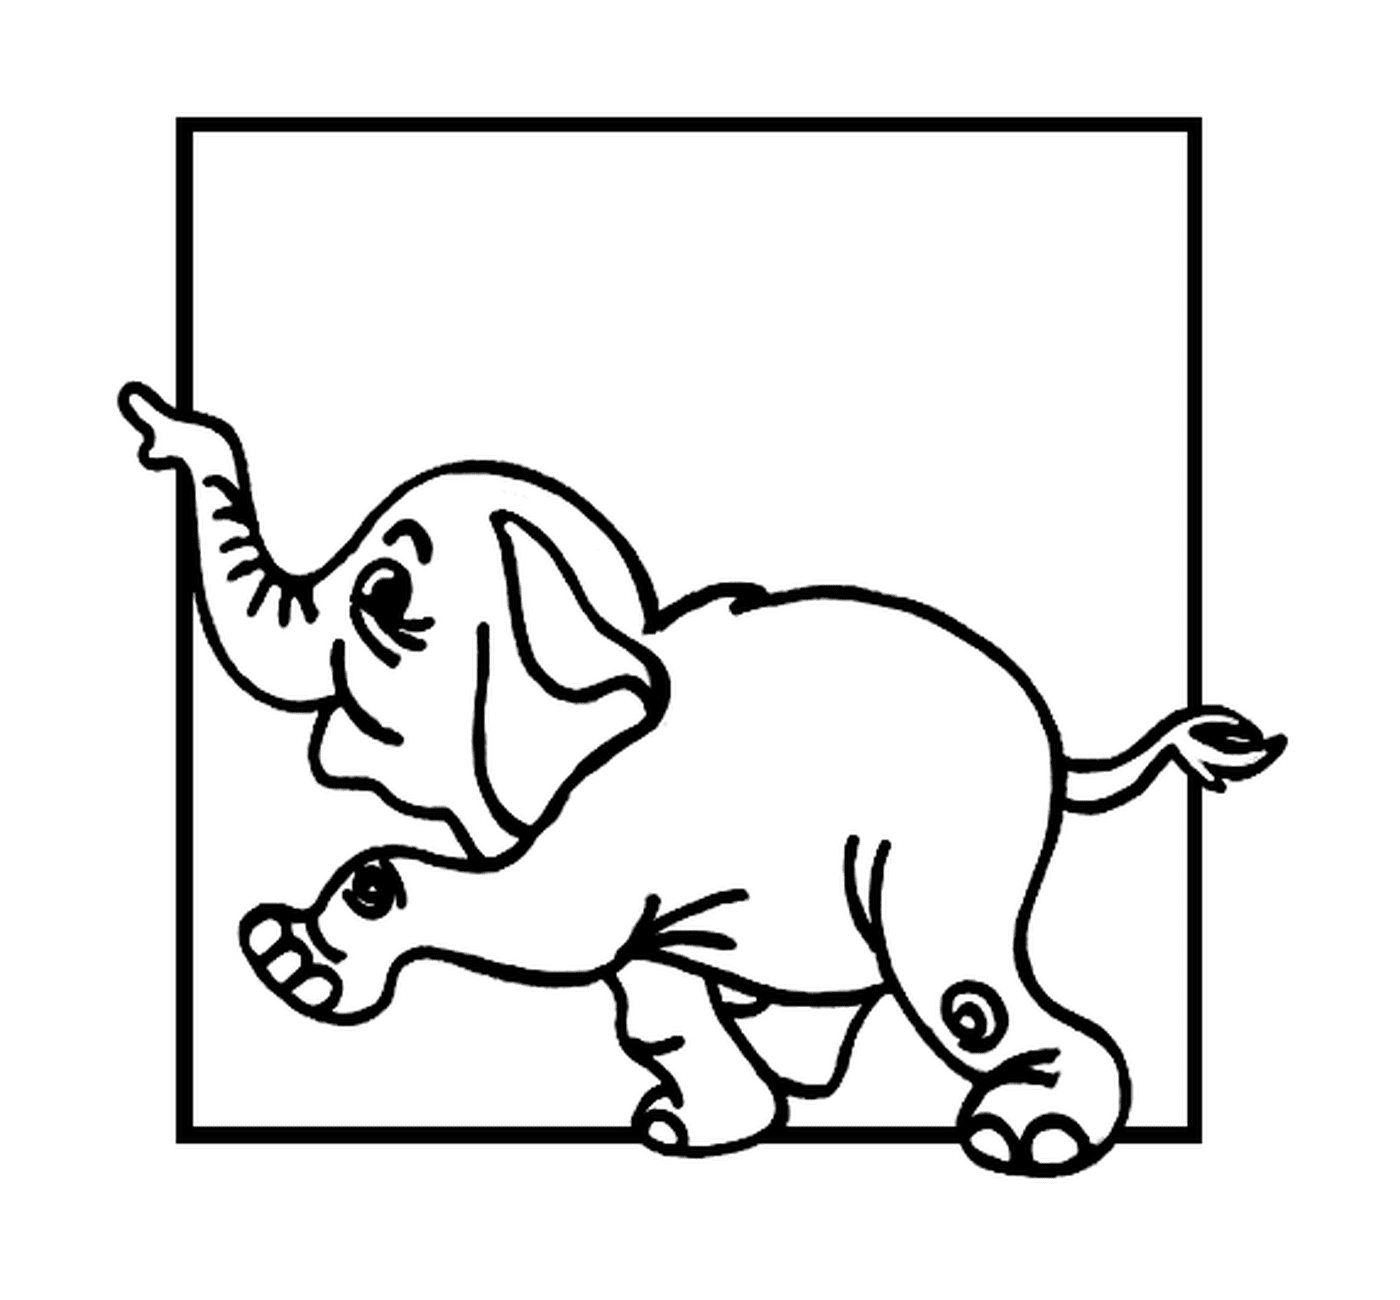  A framed elephant 